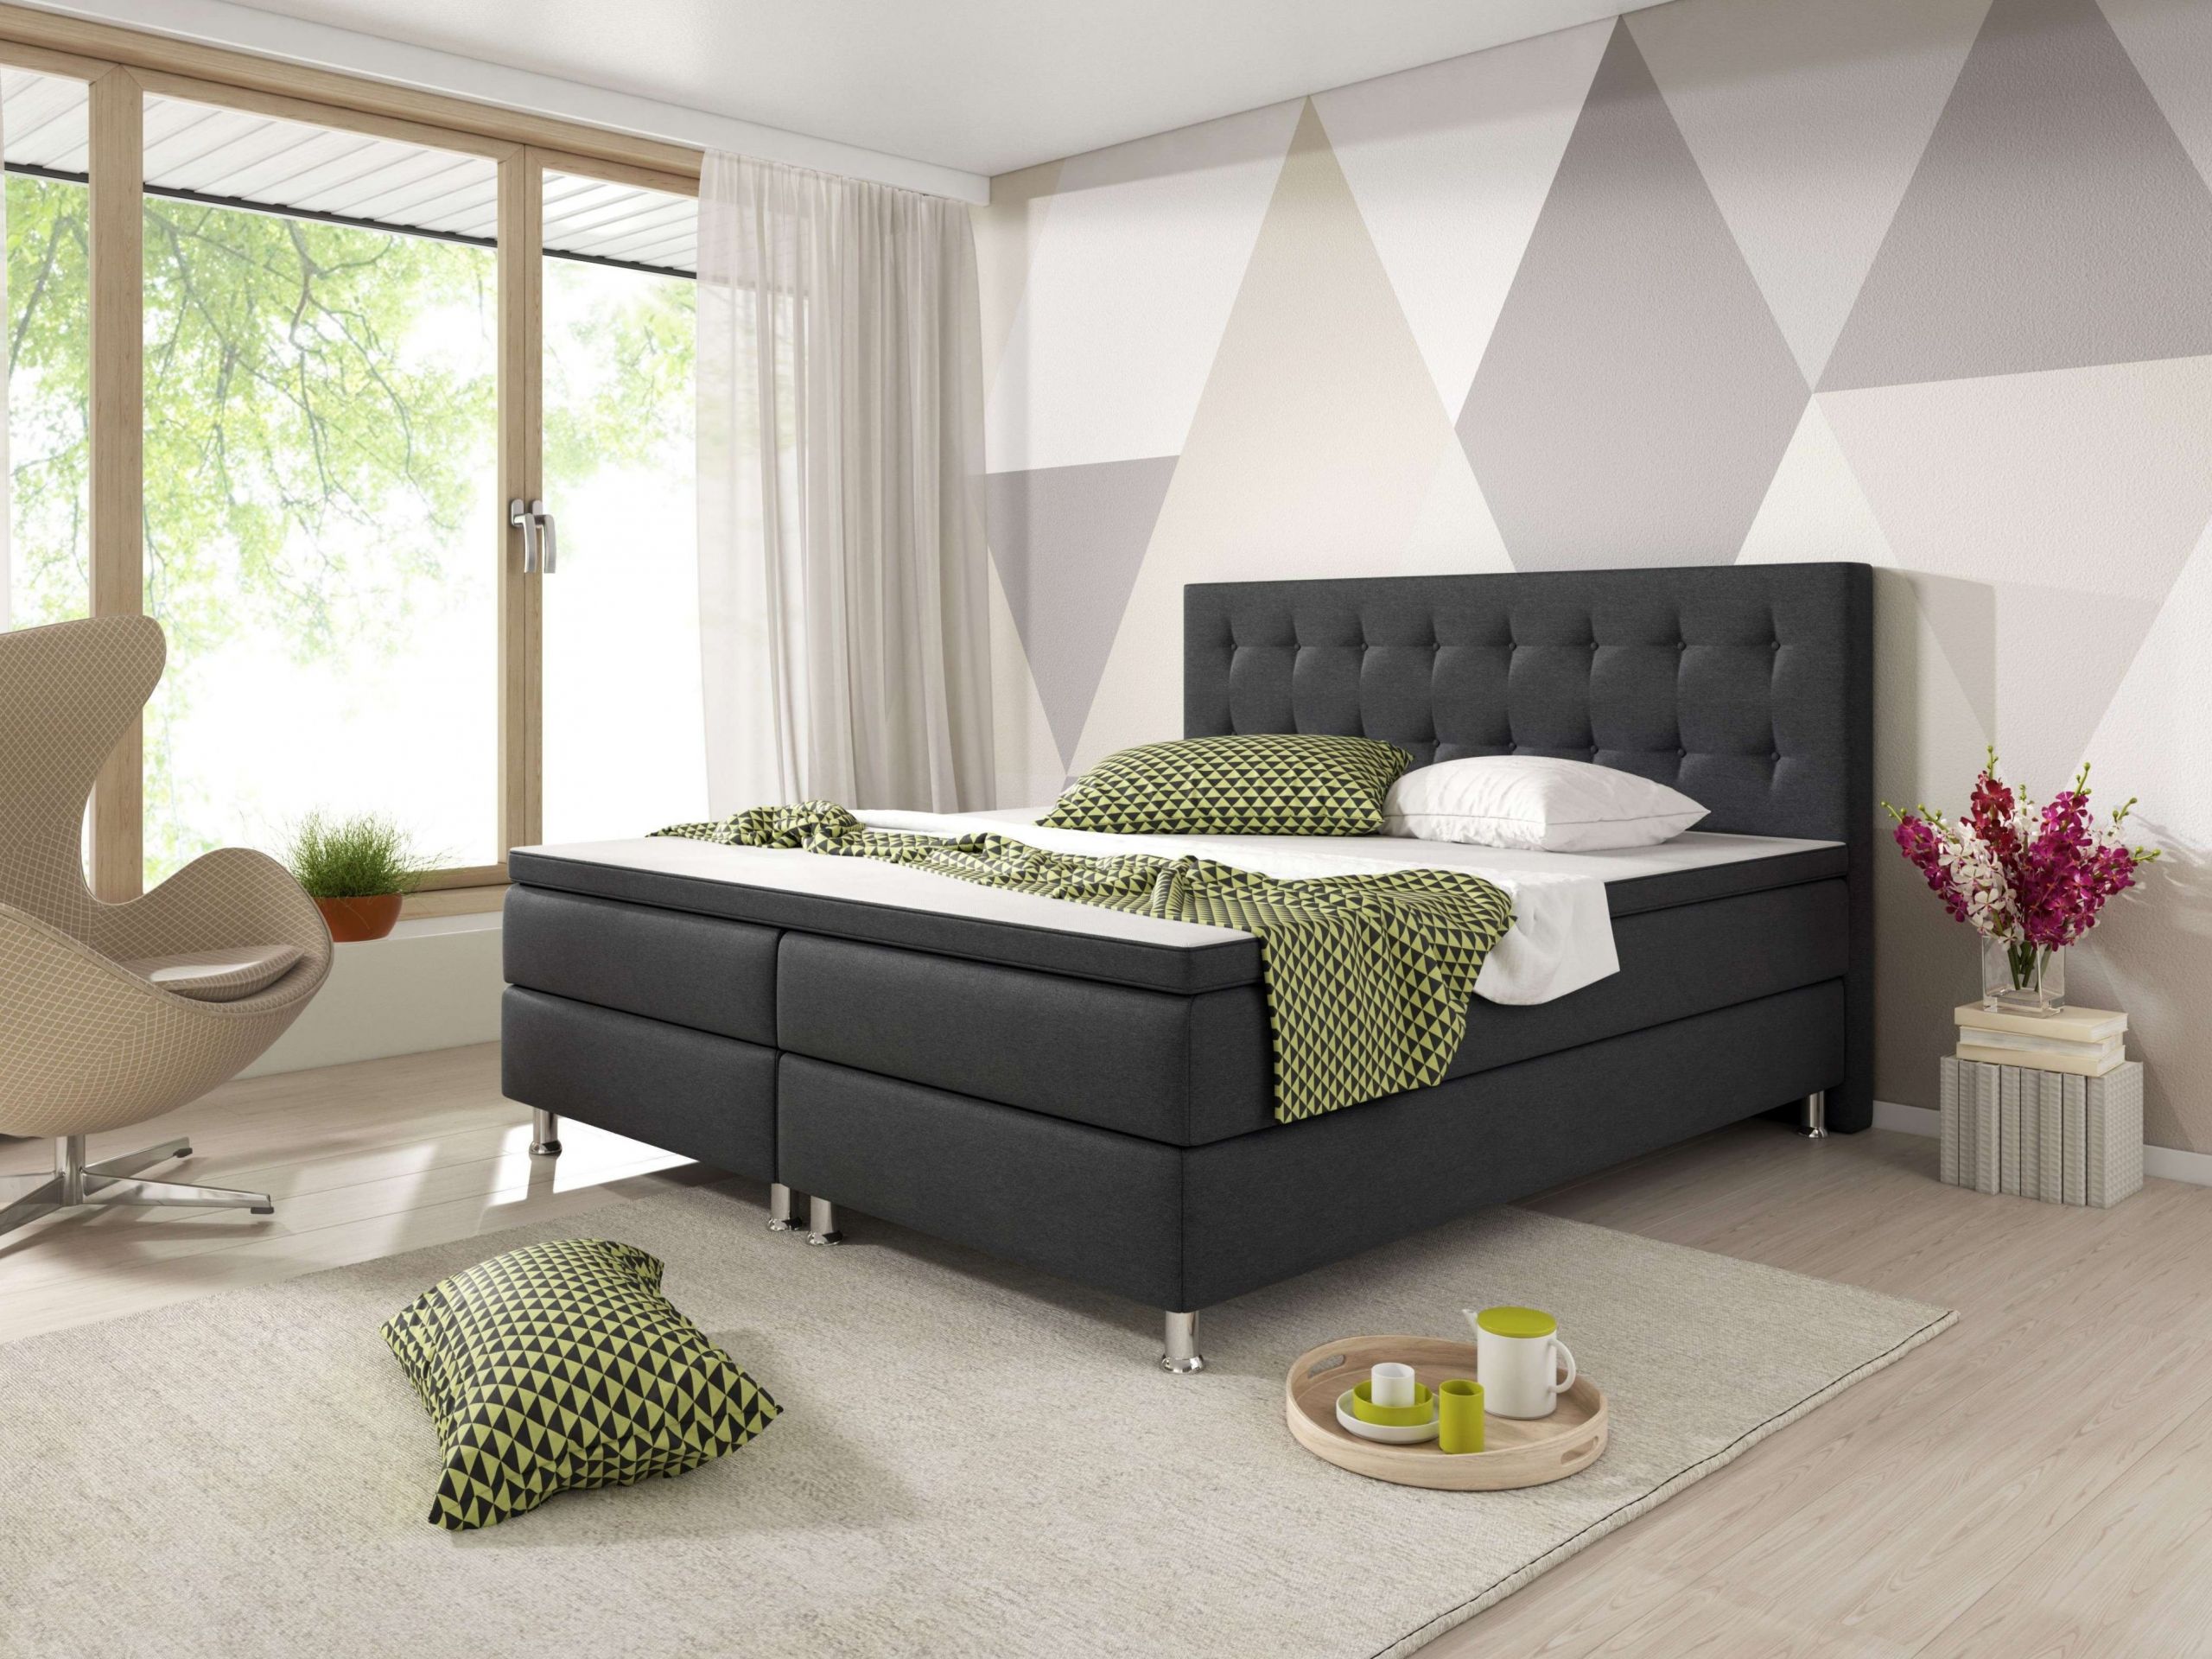 Ideen Dekoration Luxus Bett Regal Ikea Deko Ideen Diy attraktiv Regal Schlafzimmer